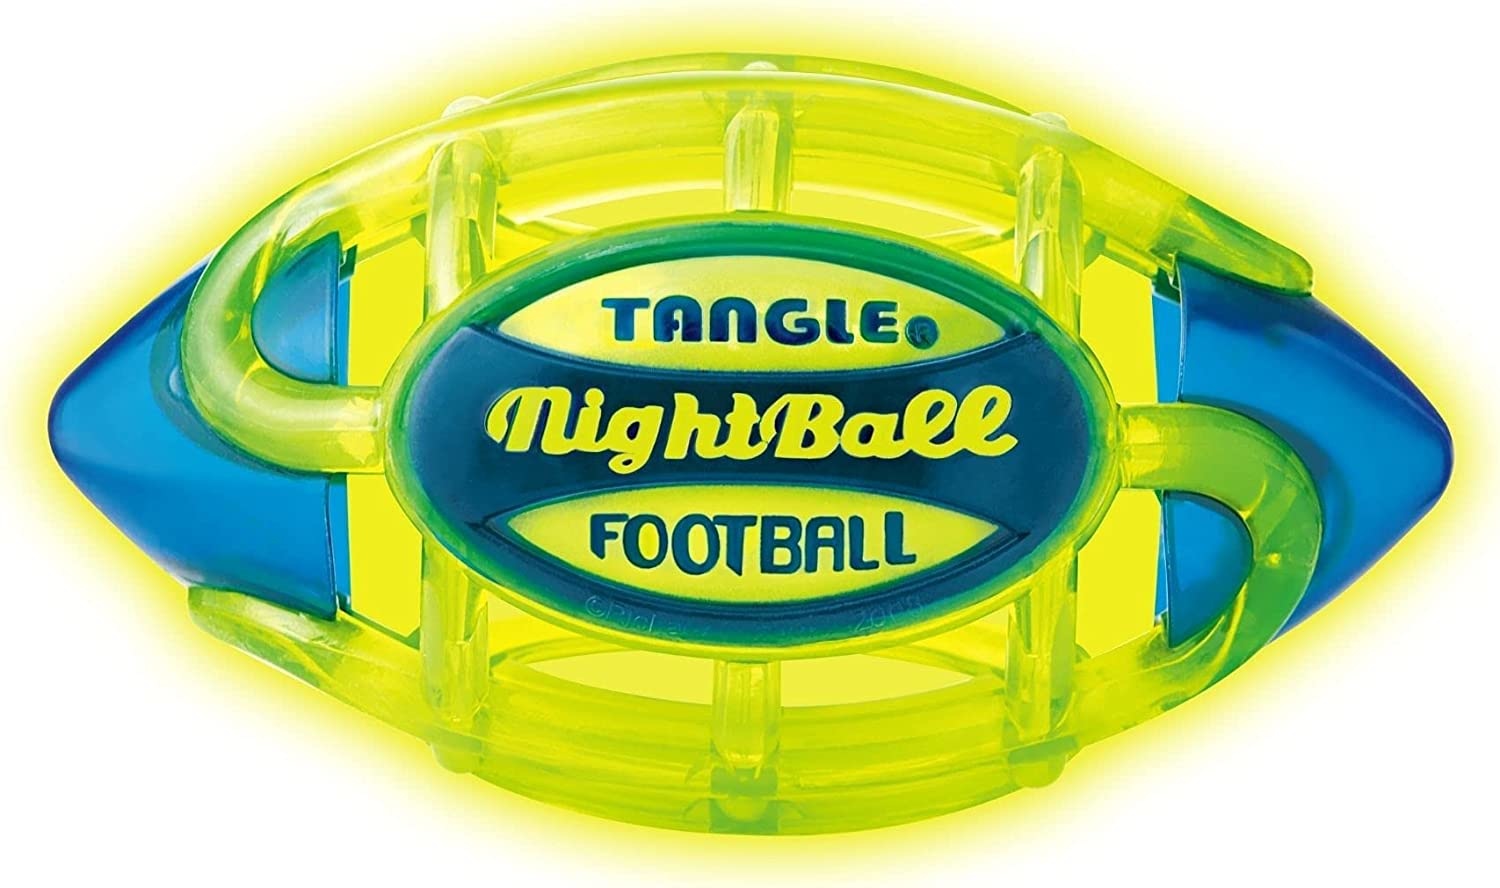 Tangle Tangle NightBall Football - Large (Green body/Blue tips)